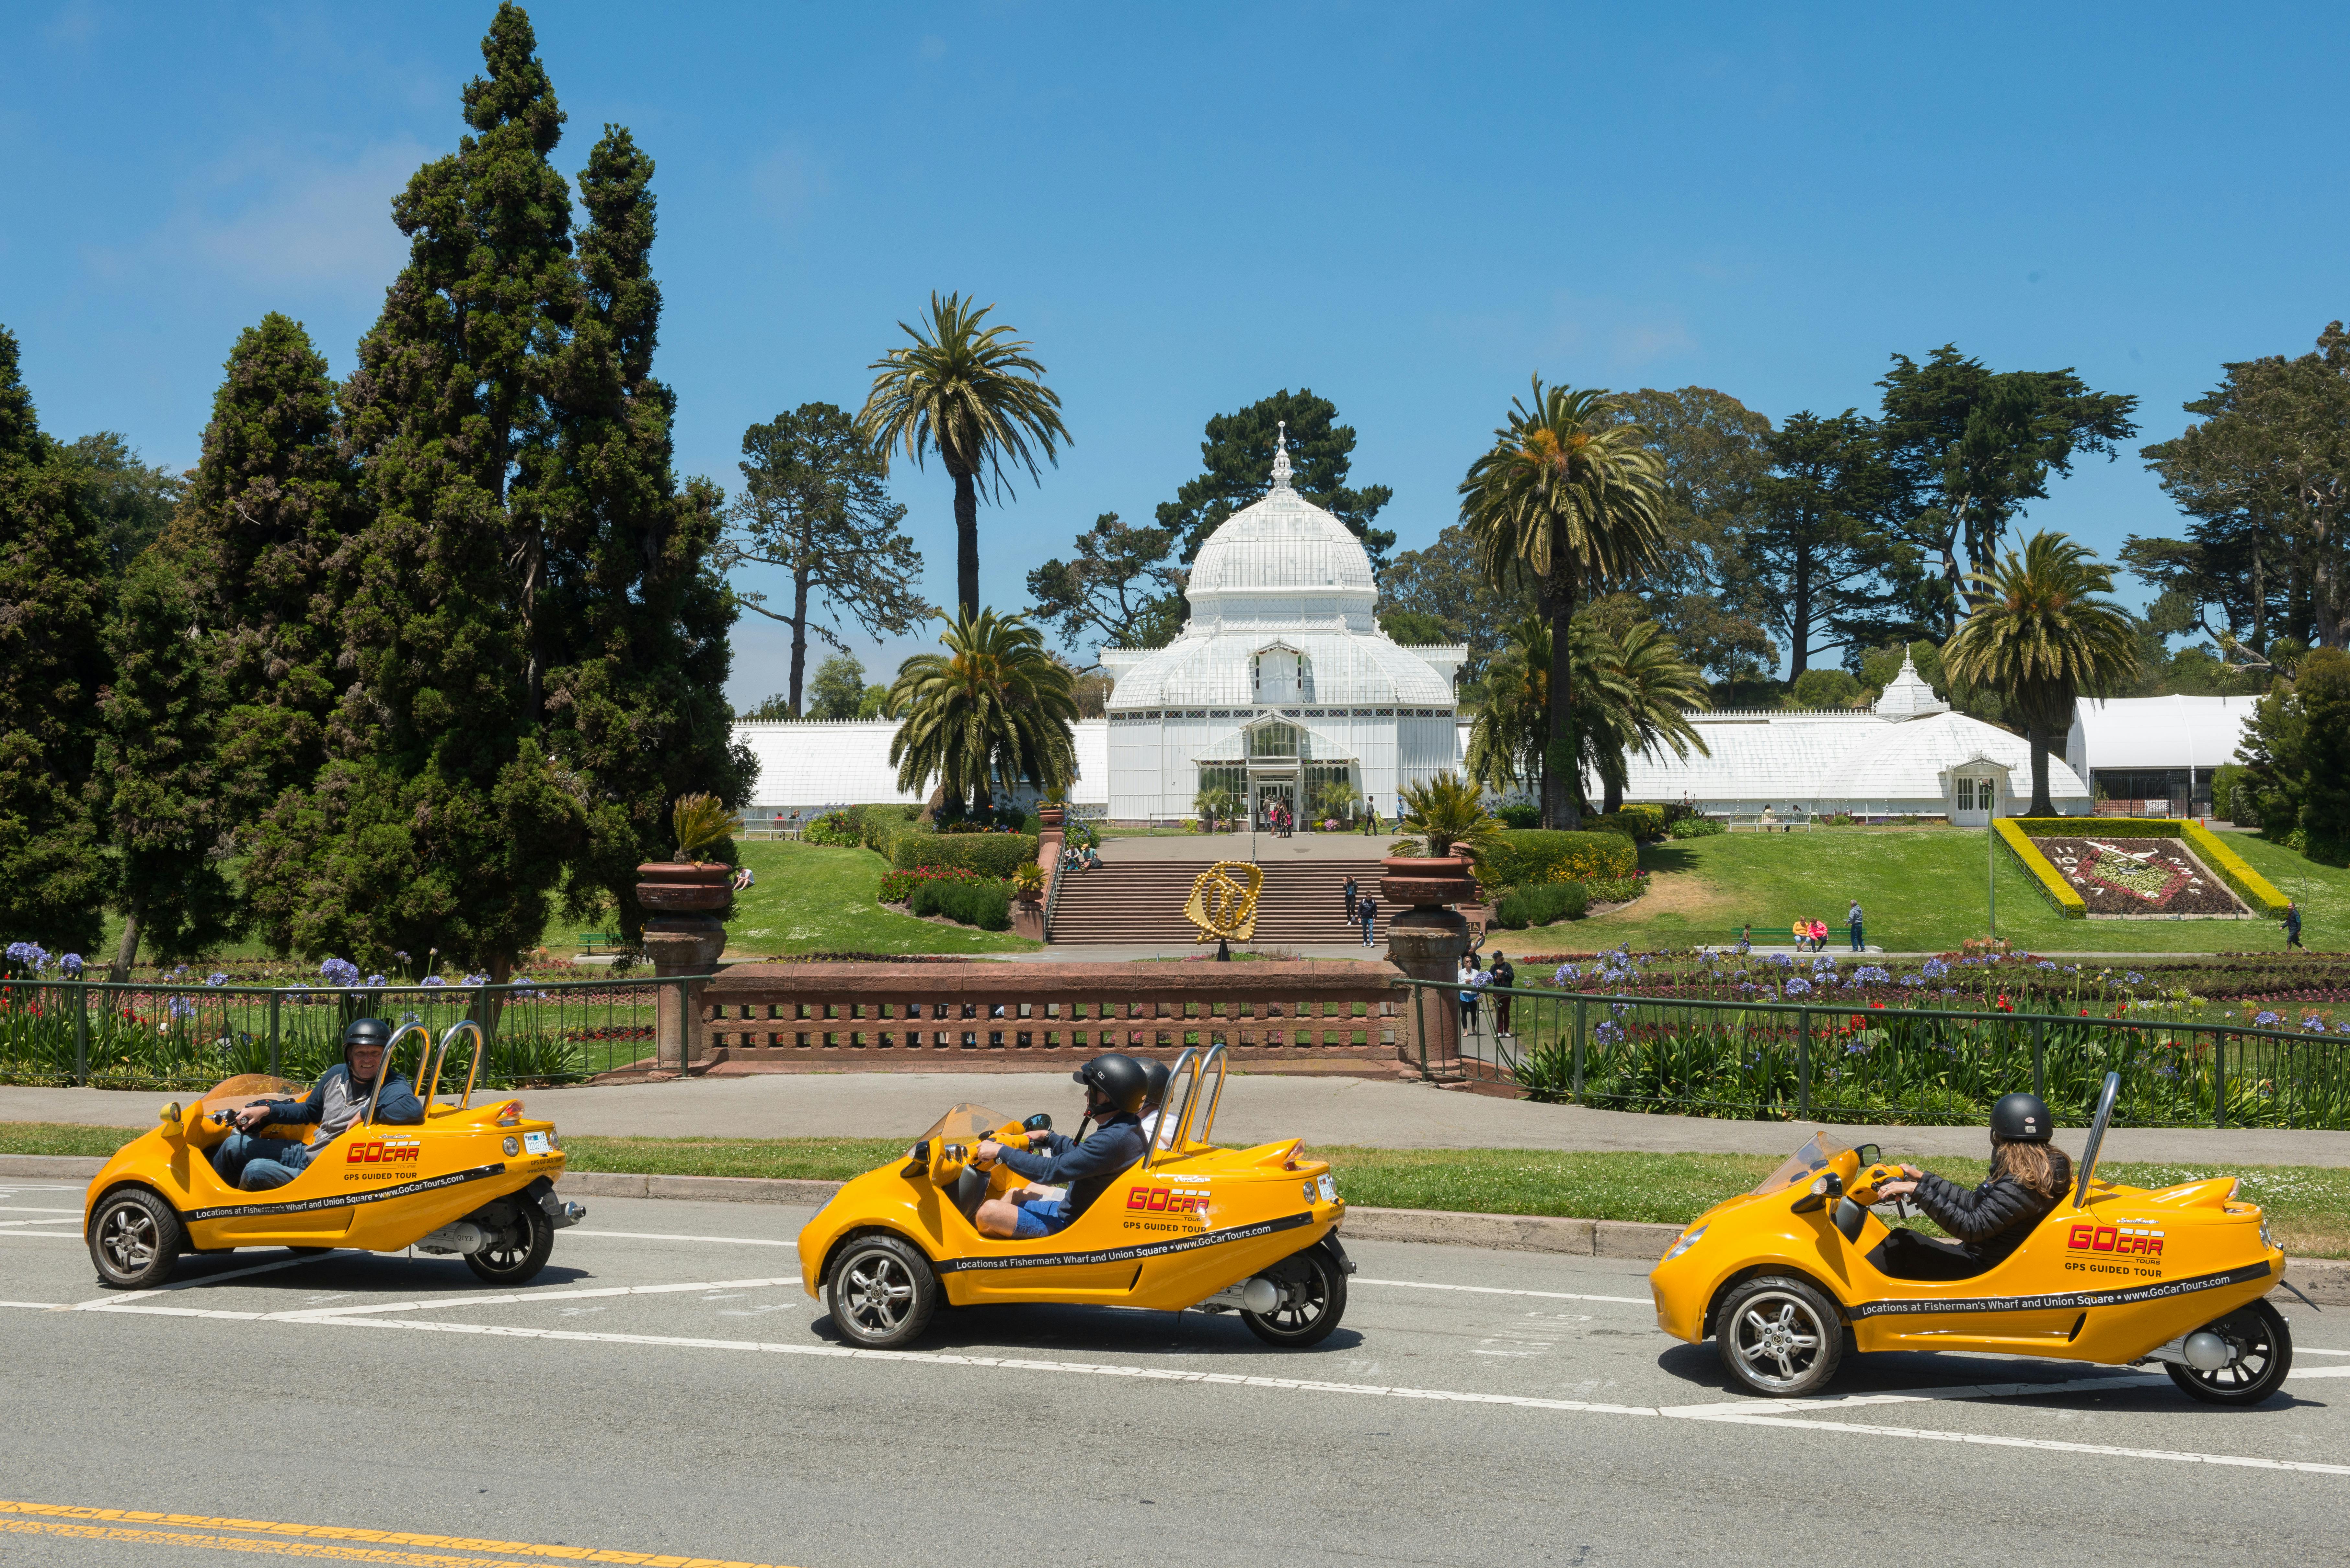 Tour GoCar de 3 horas por el parque Golden Gate